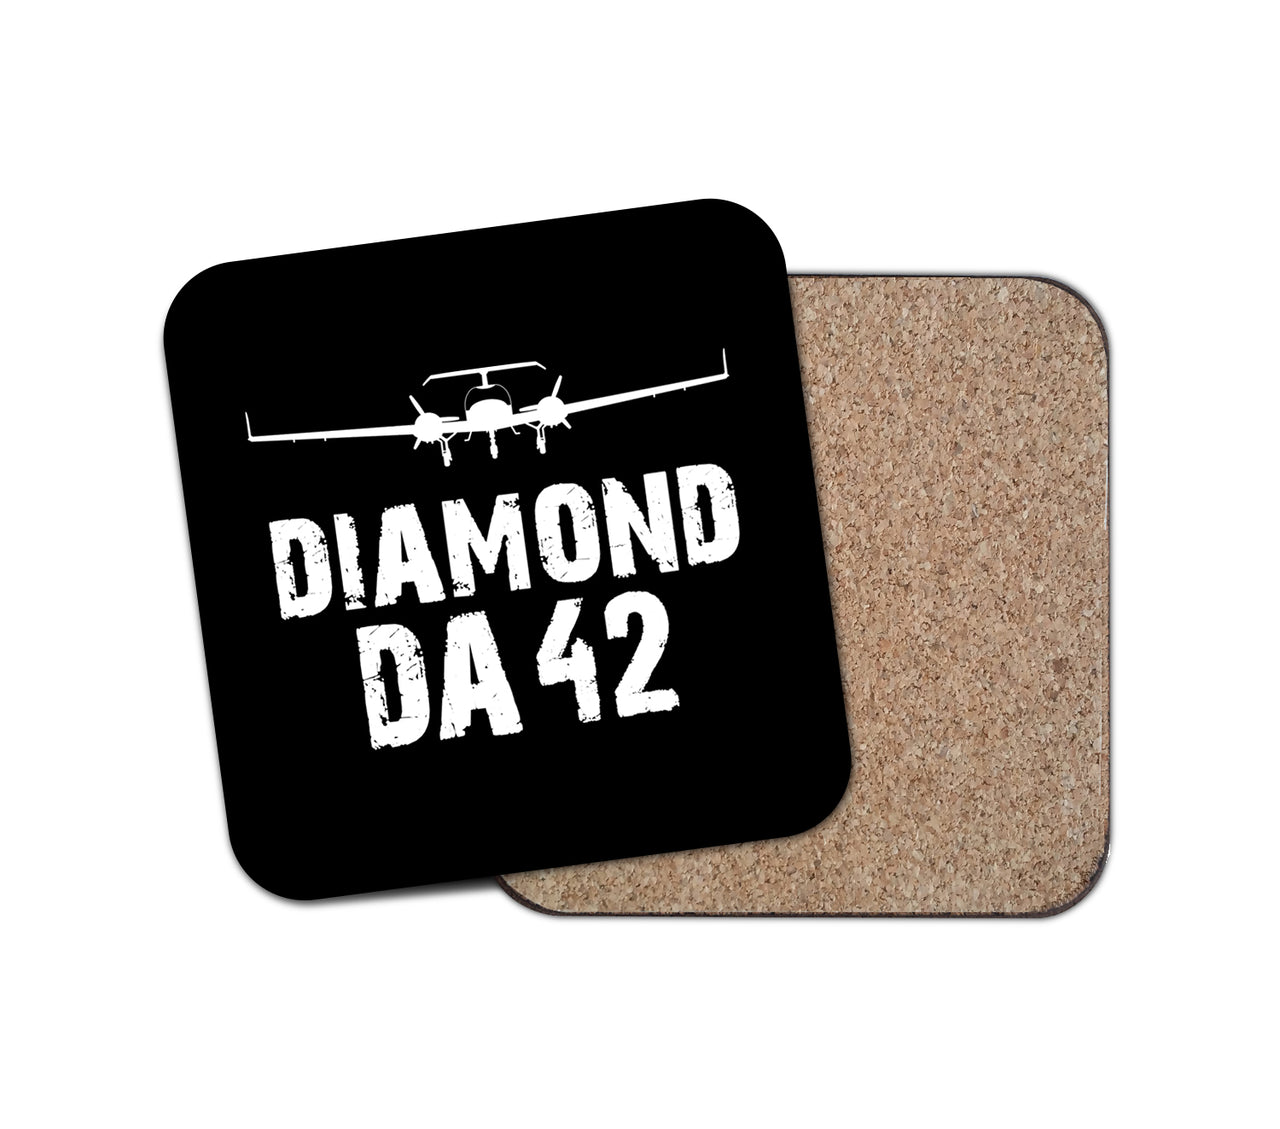 Diamond DA42 & Plane Designed Coasters